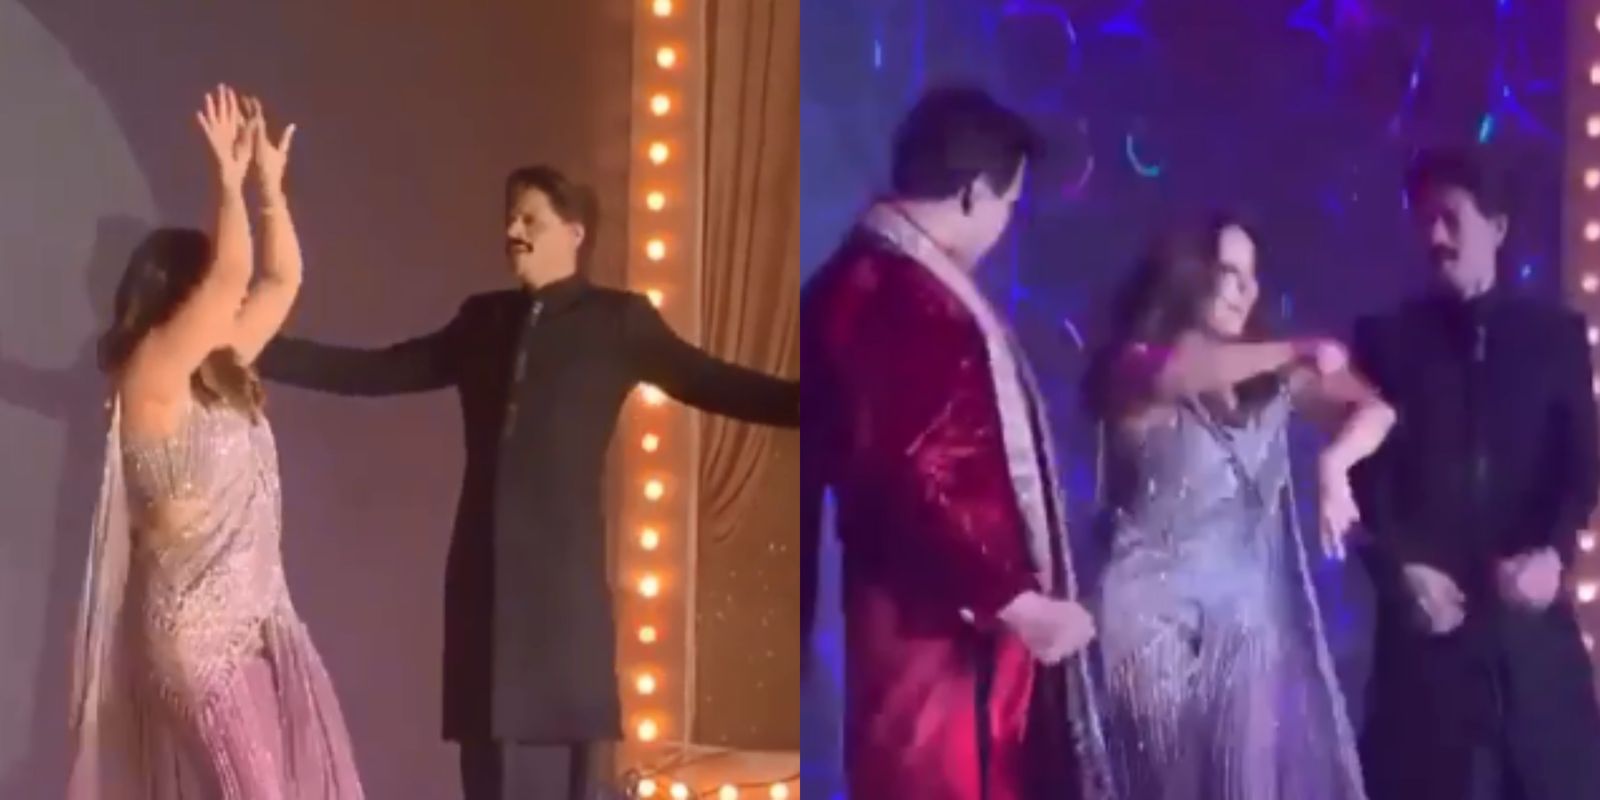 Shah Rukh Khan And Gauri Khan Burn The Dance Floor With Their Killer Moves At Armaan Jain’s Wedding Reception; Watch